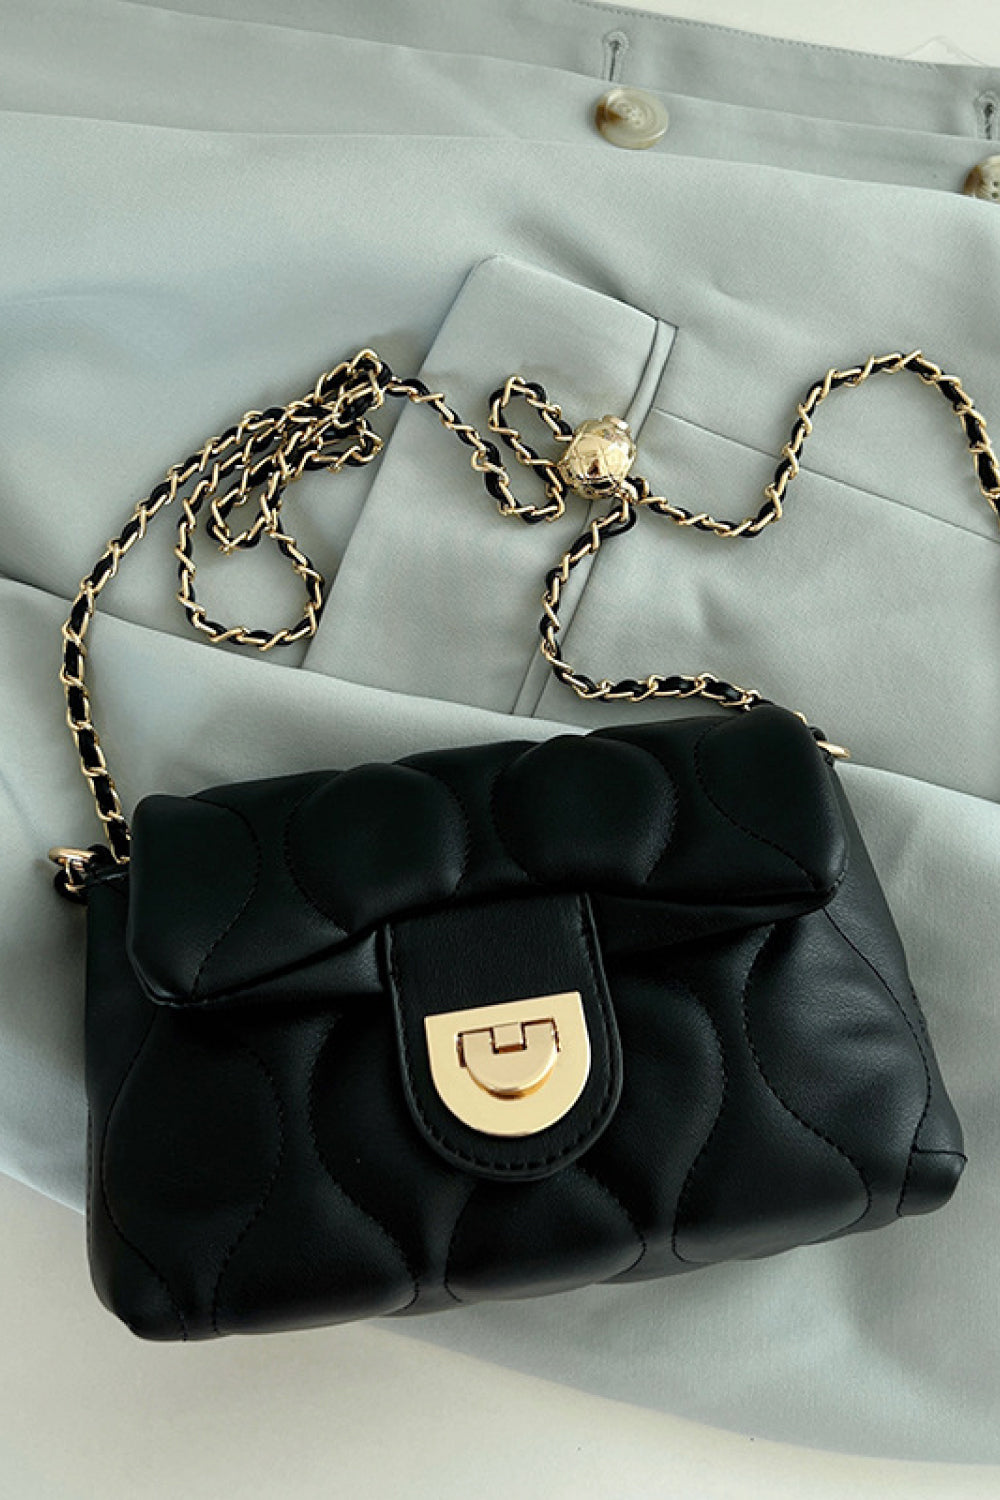 PU Leather Adjustable Chain Crossbody Bag Black One Size